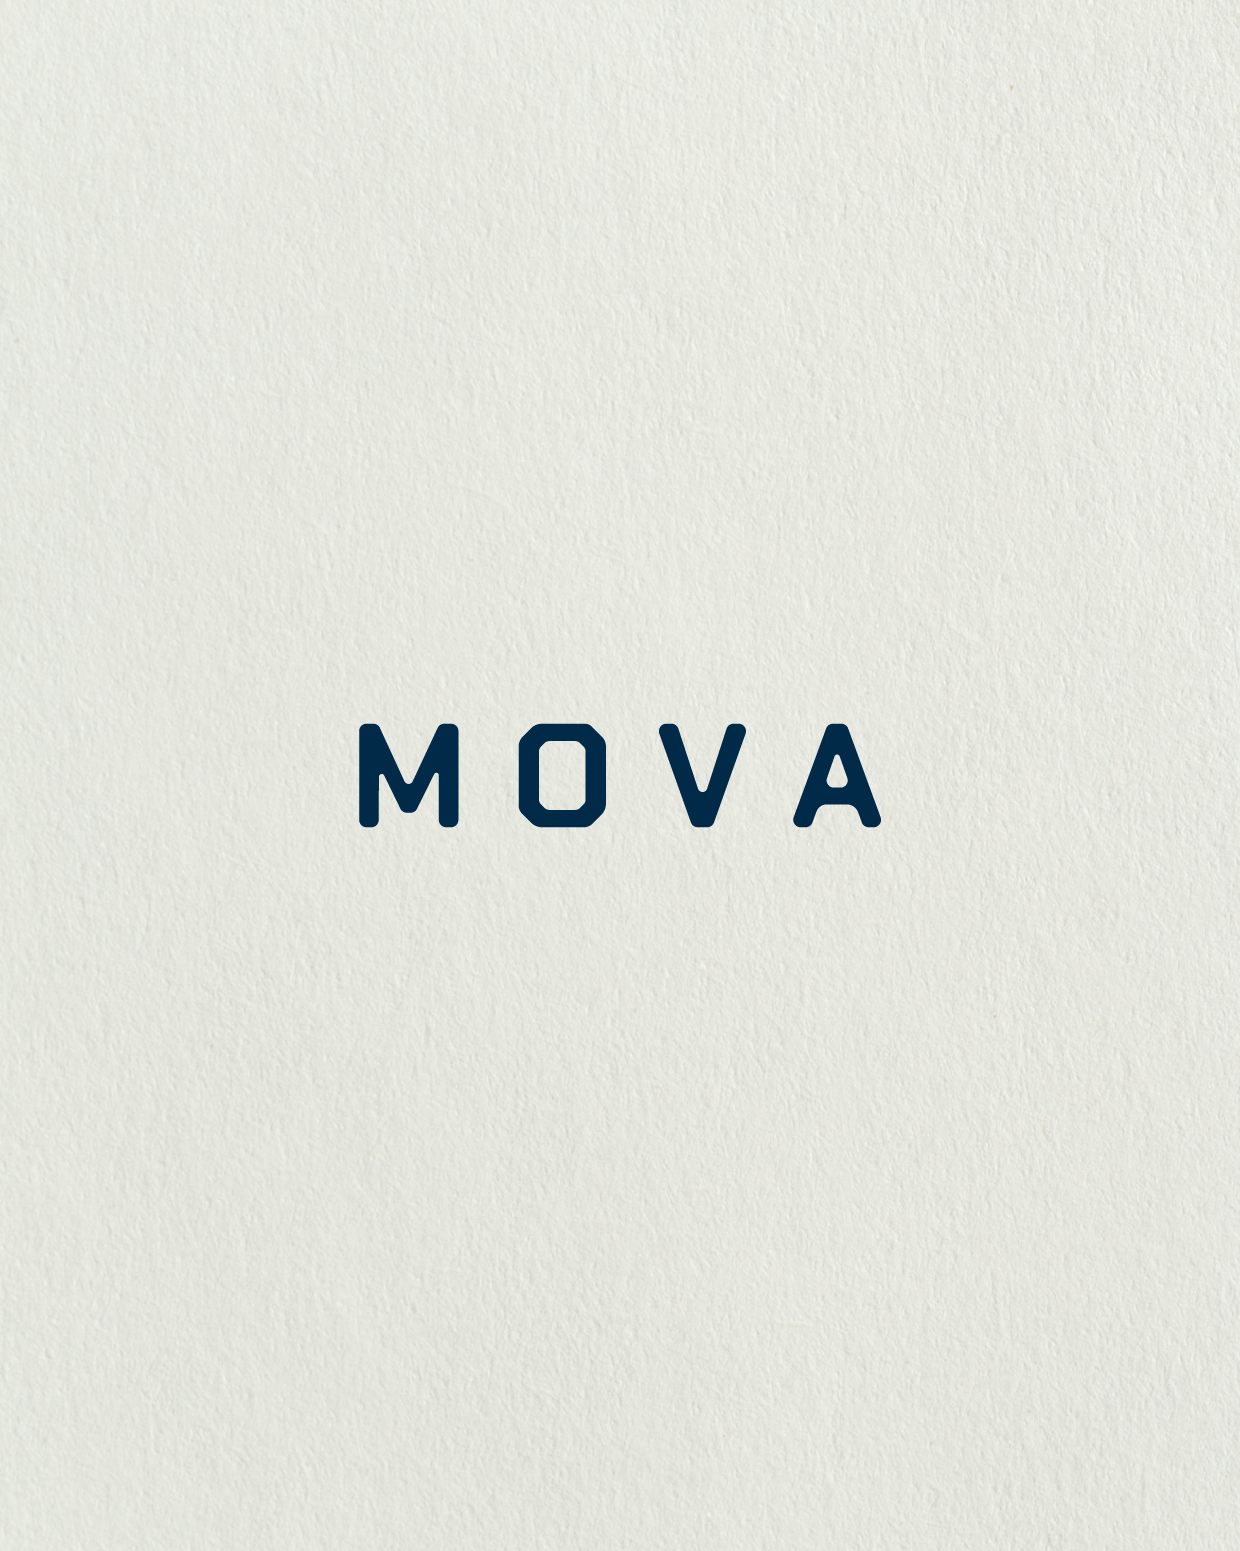 Typography logo design for MOVA outdoor adventure